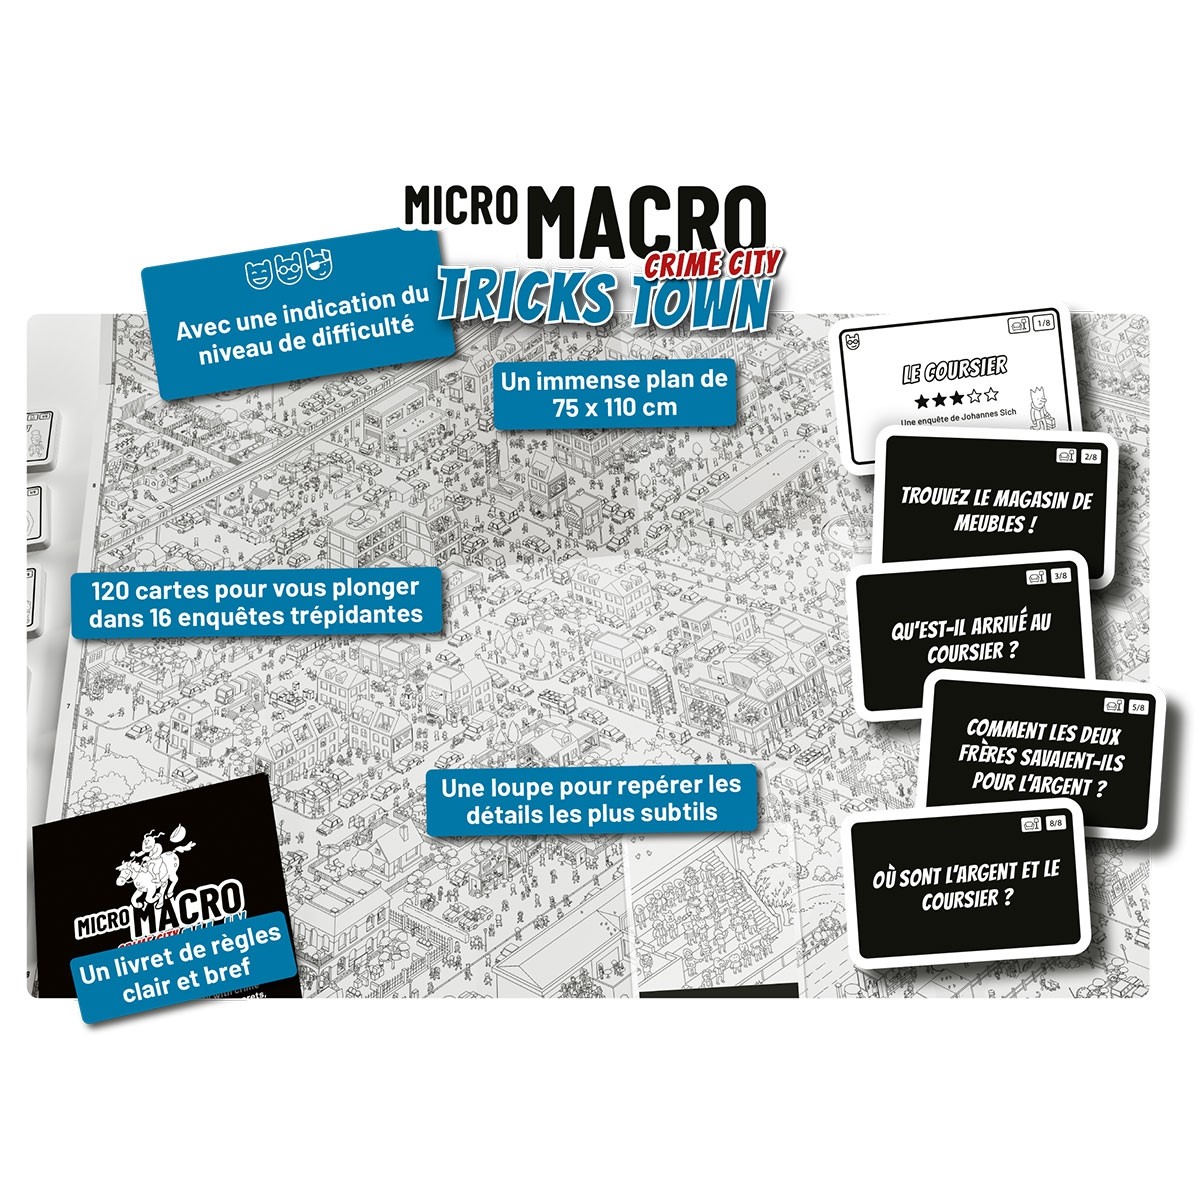 micro-macro-crime-city-tricks-town-materiel